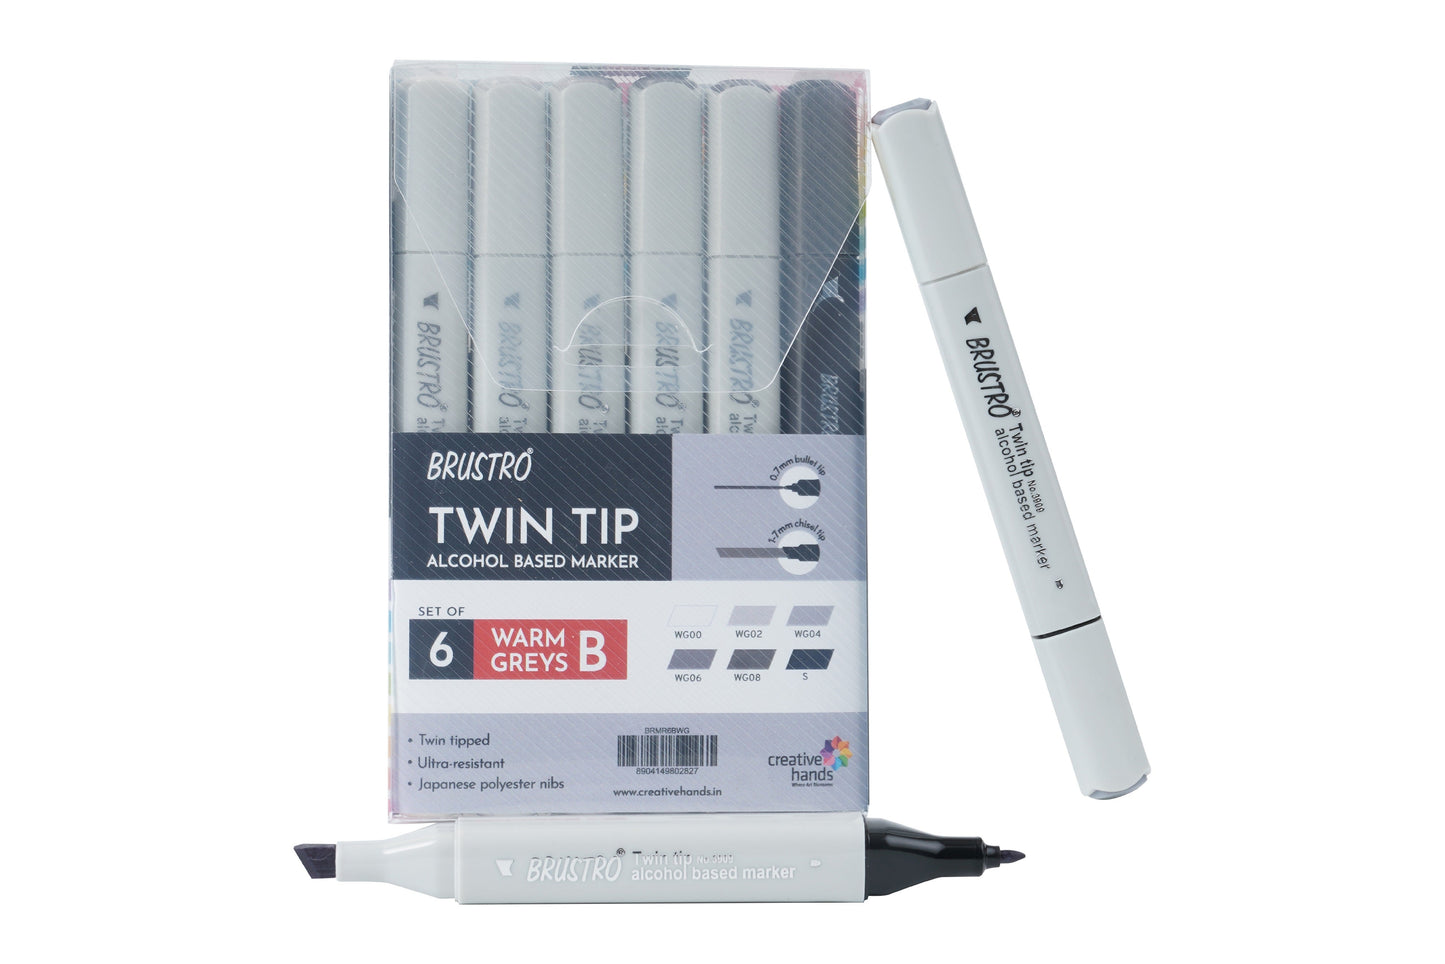 Brustro Twin Tip Alcohol Based Marker Set of 6 - Warm Greys Set B